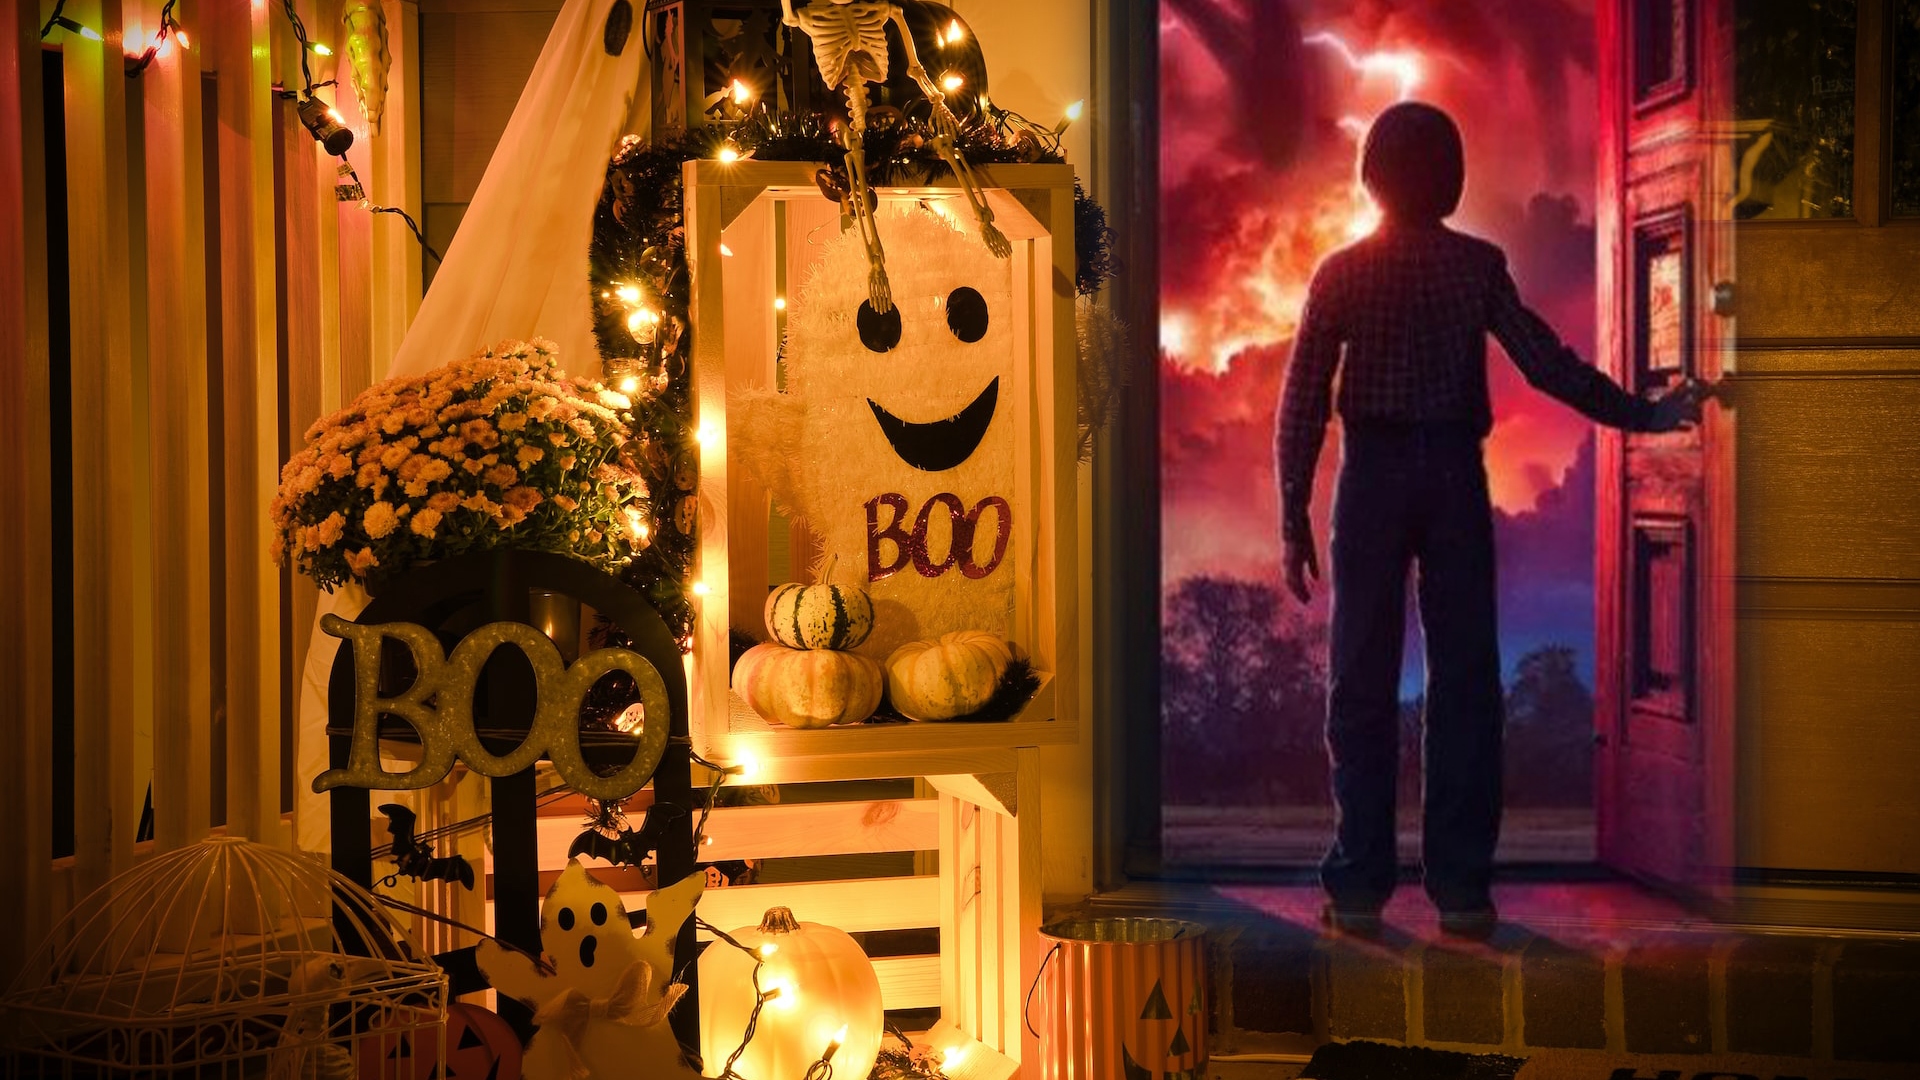 https://www.everlineart.com/wp-content/uploads/2022/09/The-Ultimate-Stranger-Things-Halloween-Theme-Cover.jpg